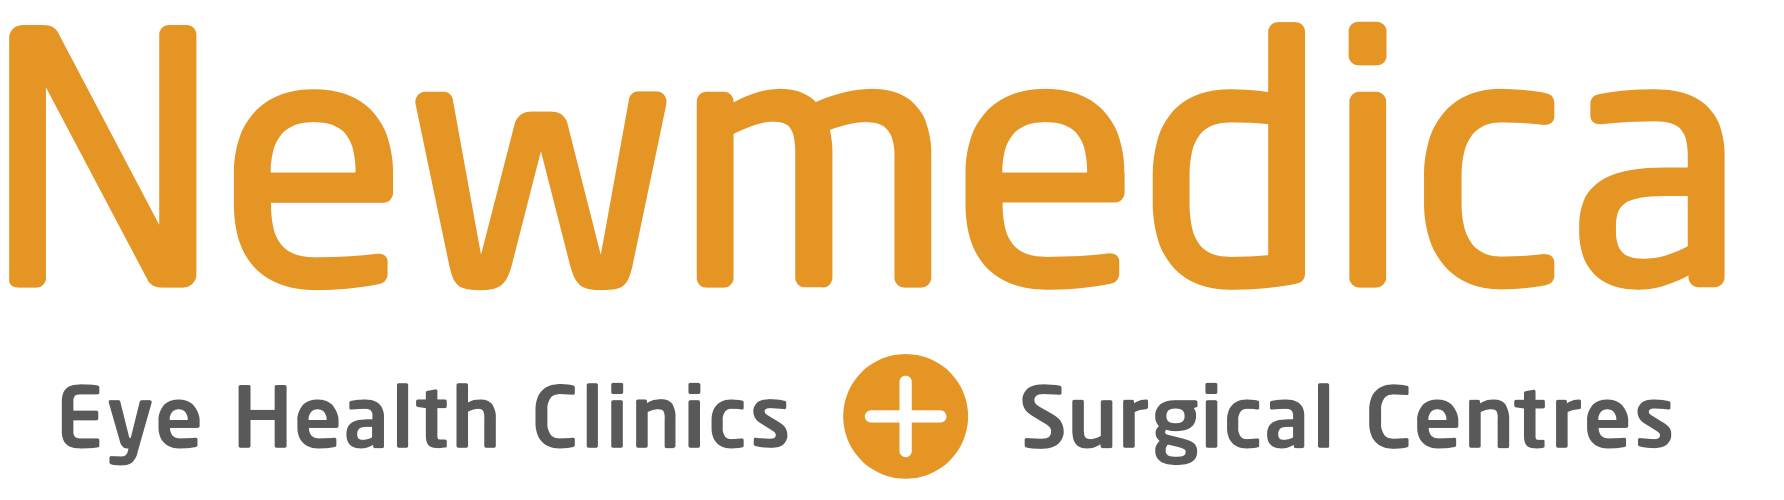 Ipswich - Newmedica logo